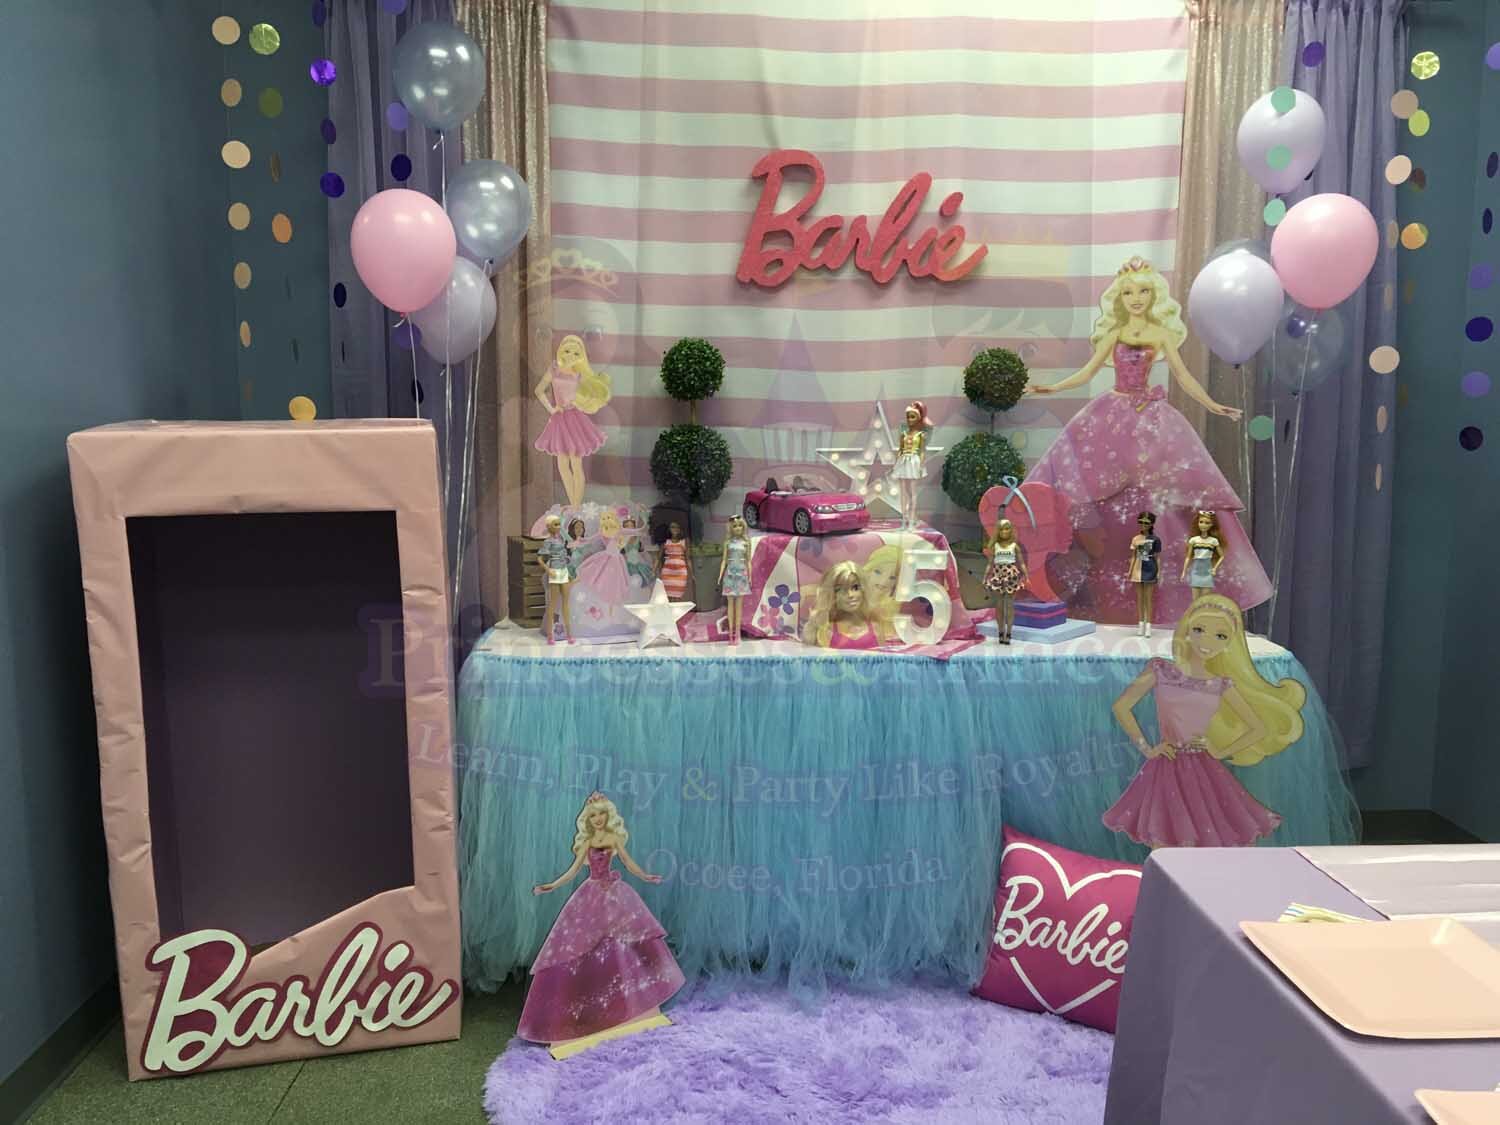 barbie-decorations-birthday-party-diy-tutorial-barbie-birthday-party